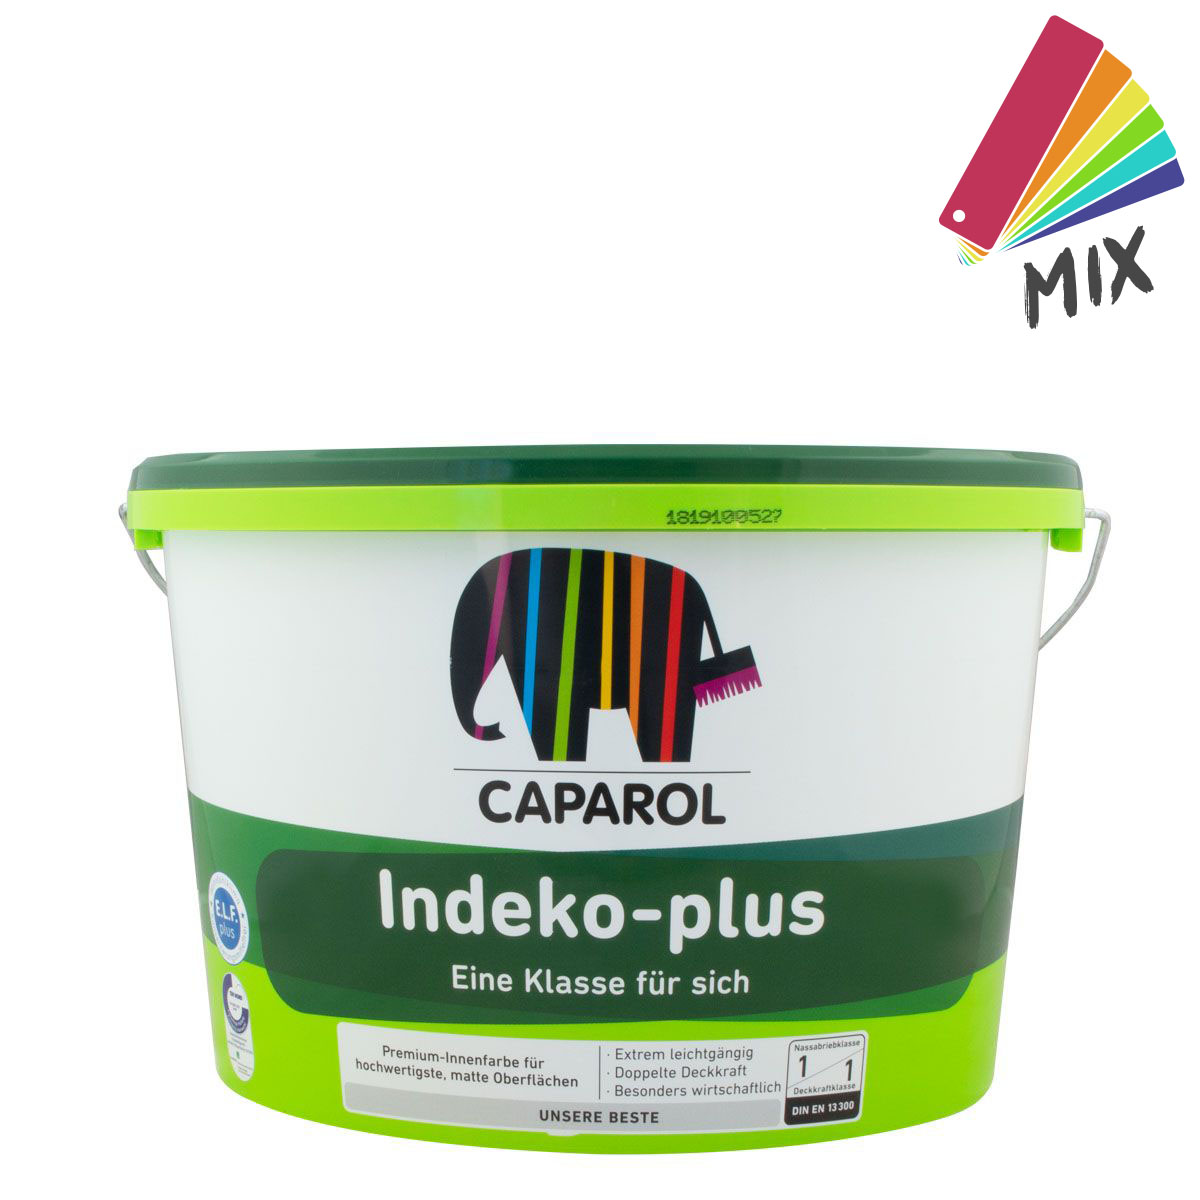 Caparol_indeko-plus_mixicon_gross